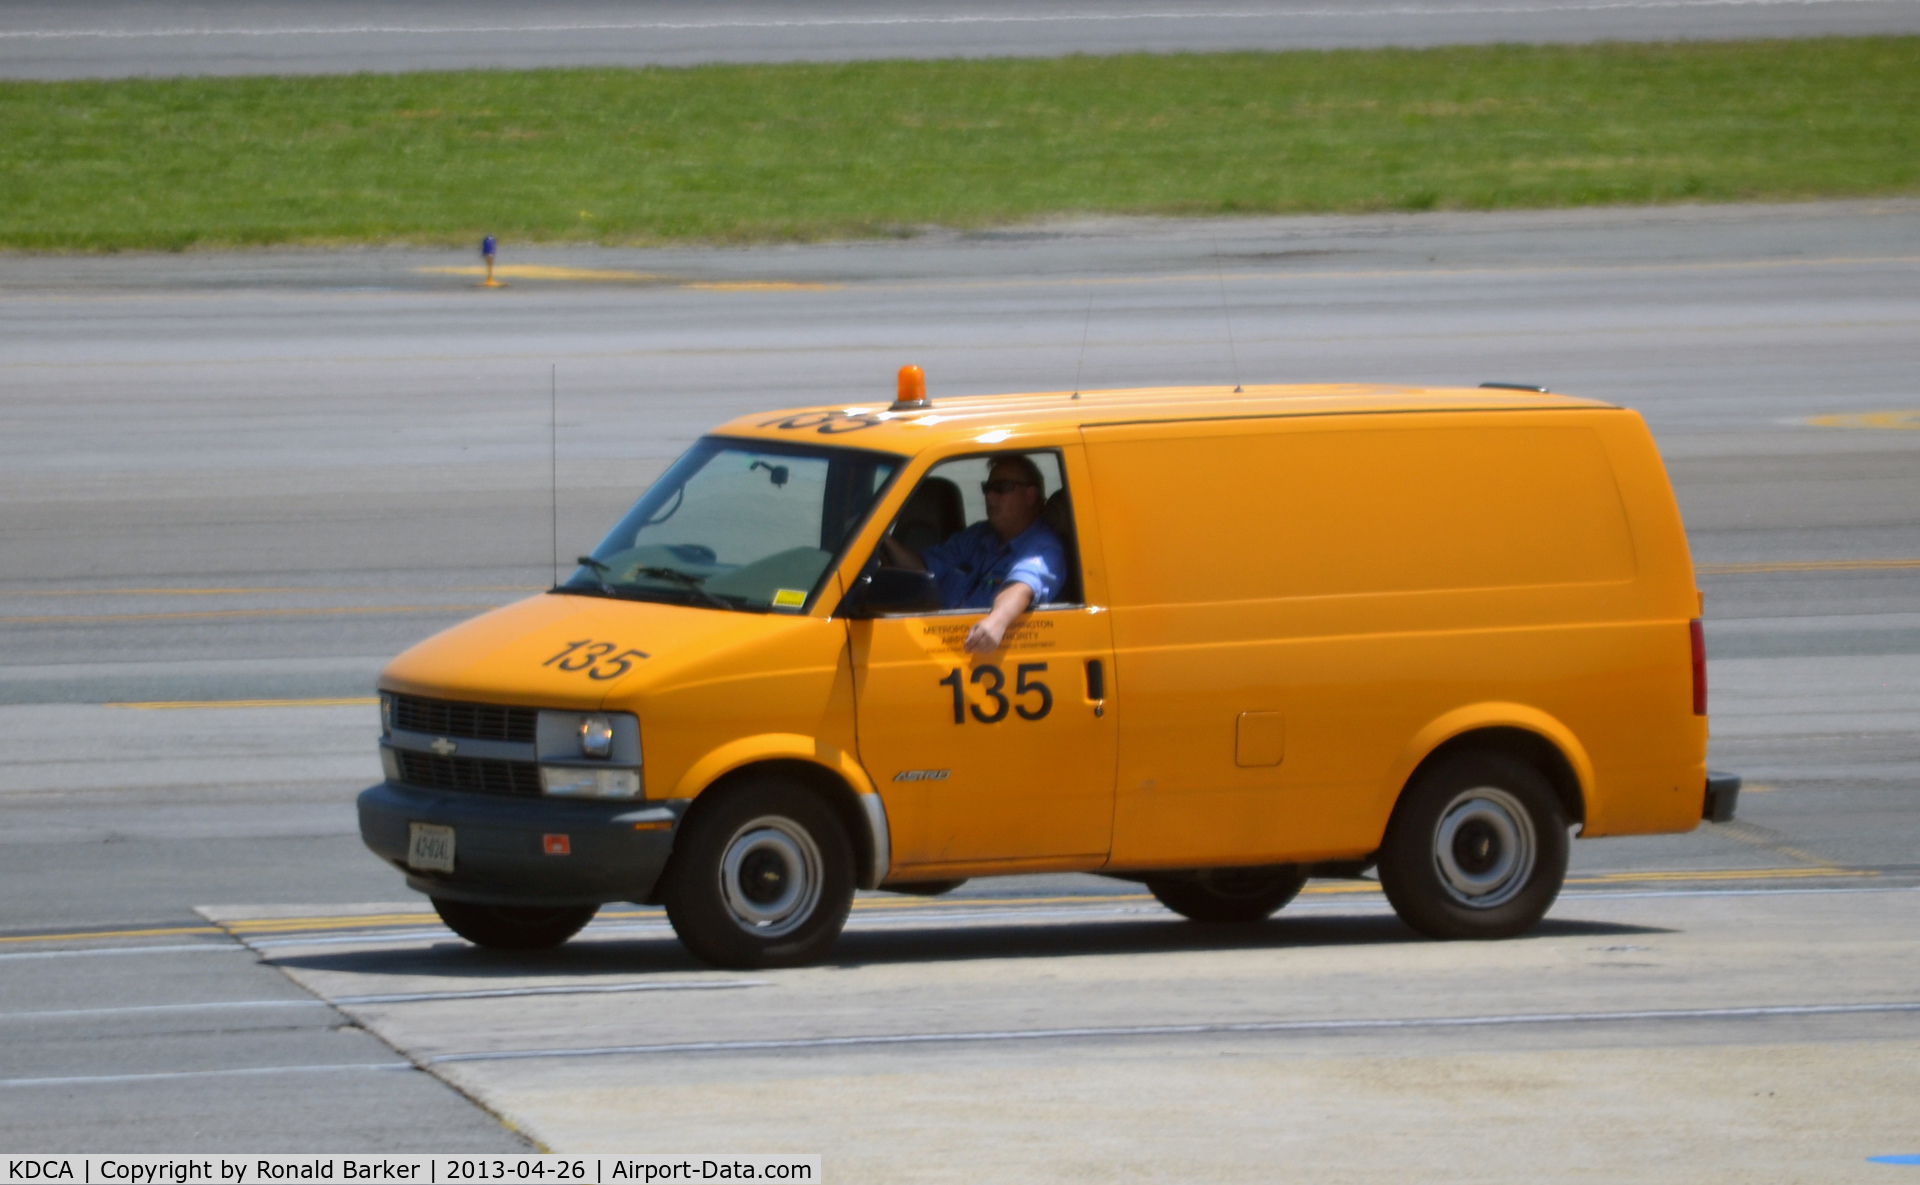 Ronald Reagan Washington National Airport (DCA) - Orange van 135